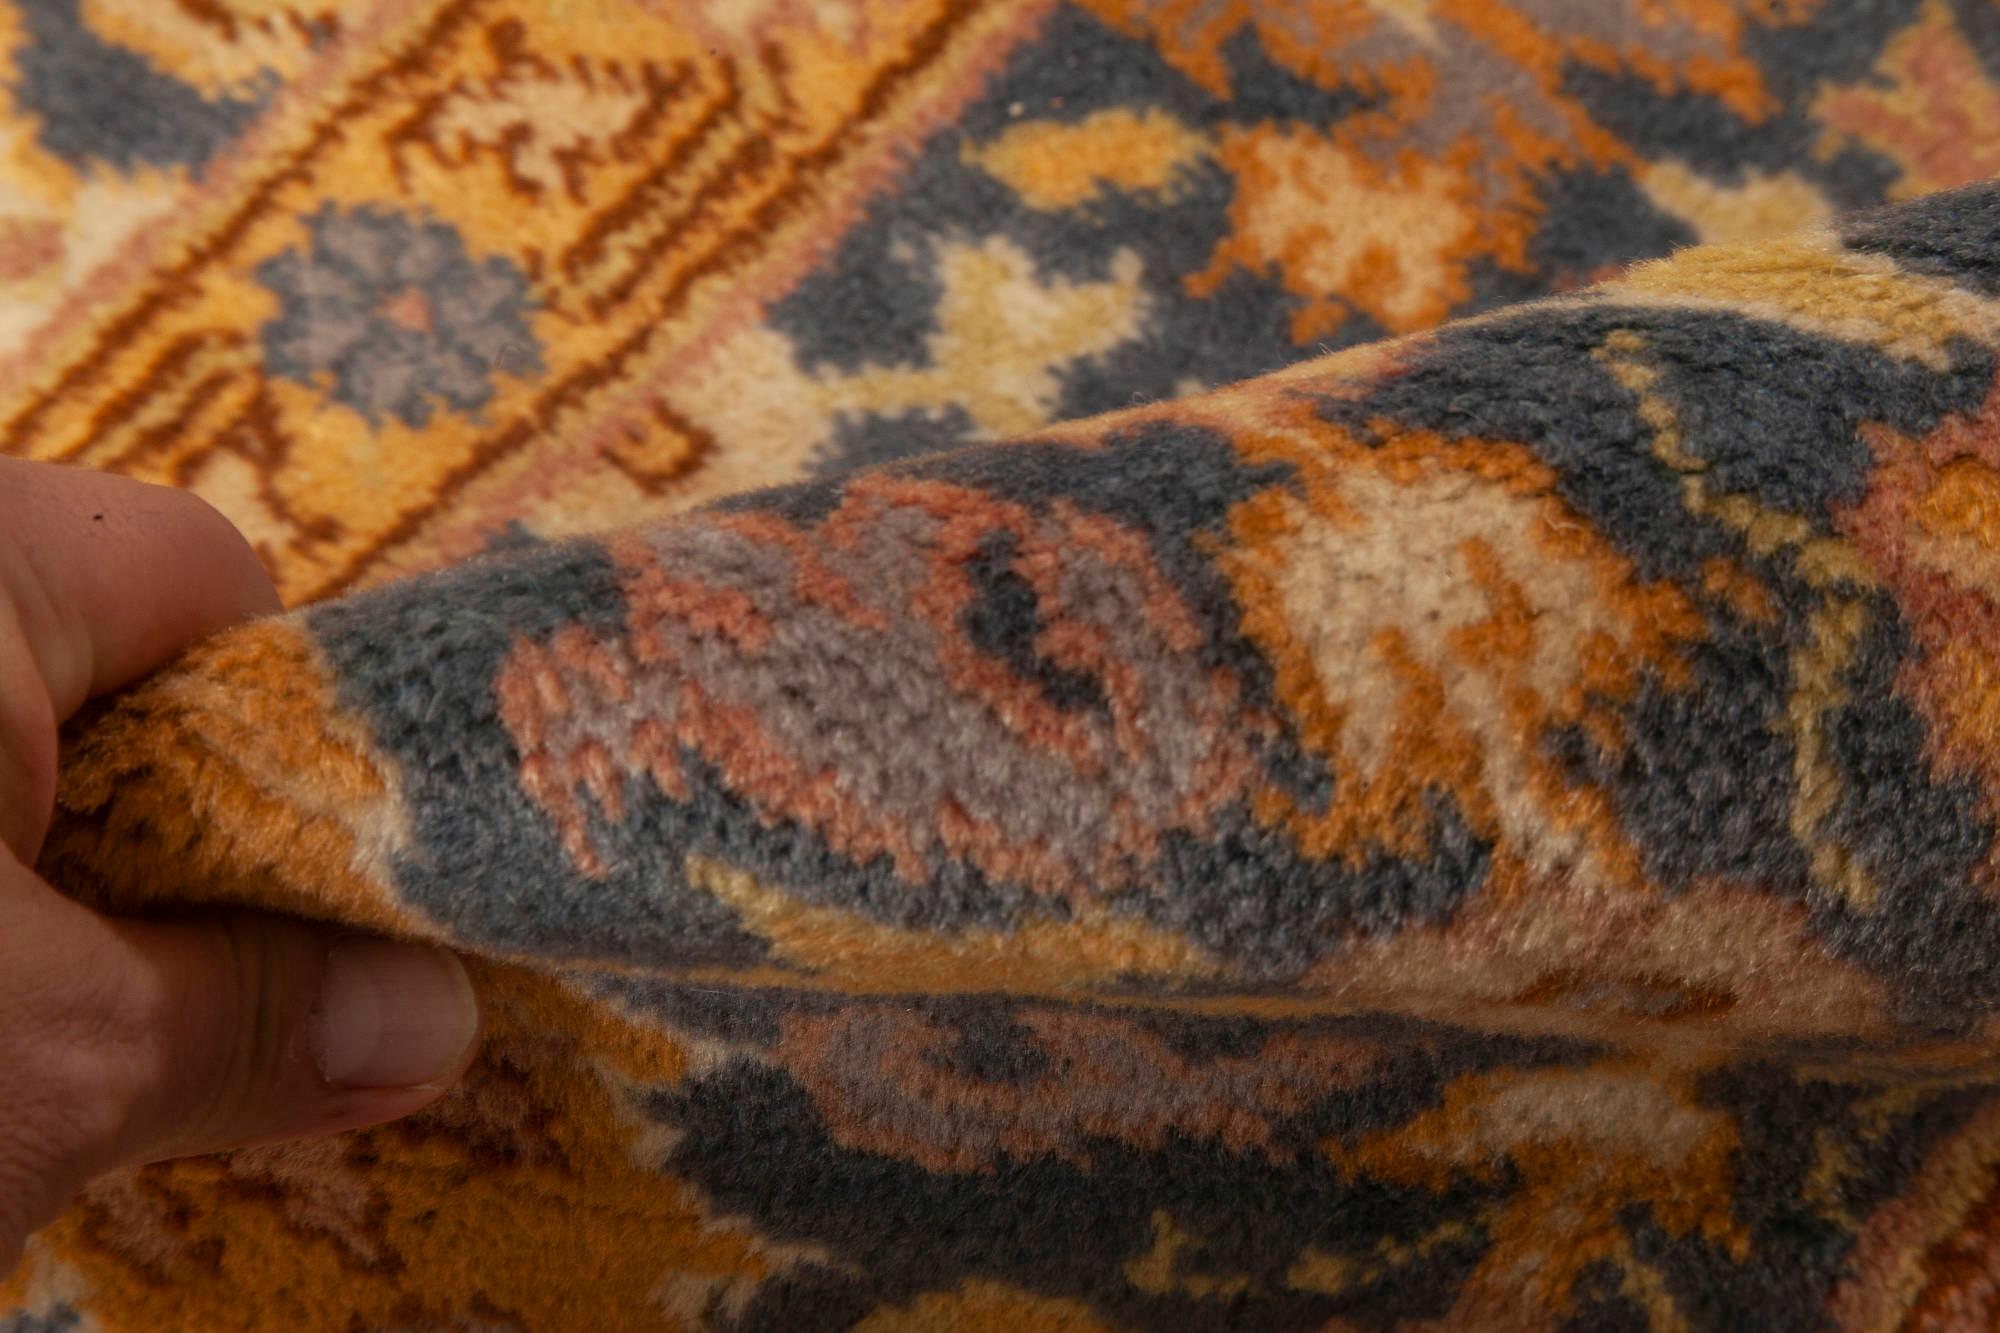 Antique Turkish Borlou Handwoven Wool Rug
Size: 13'9